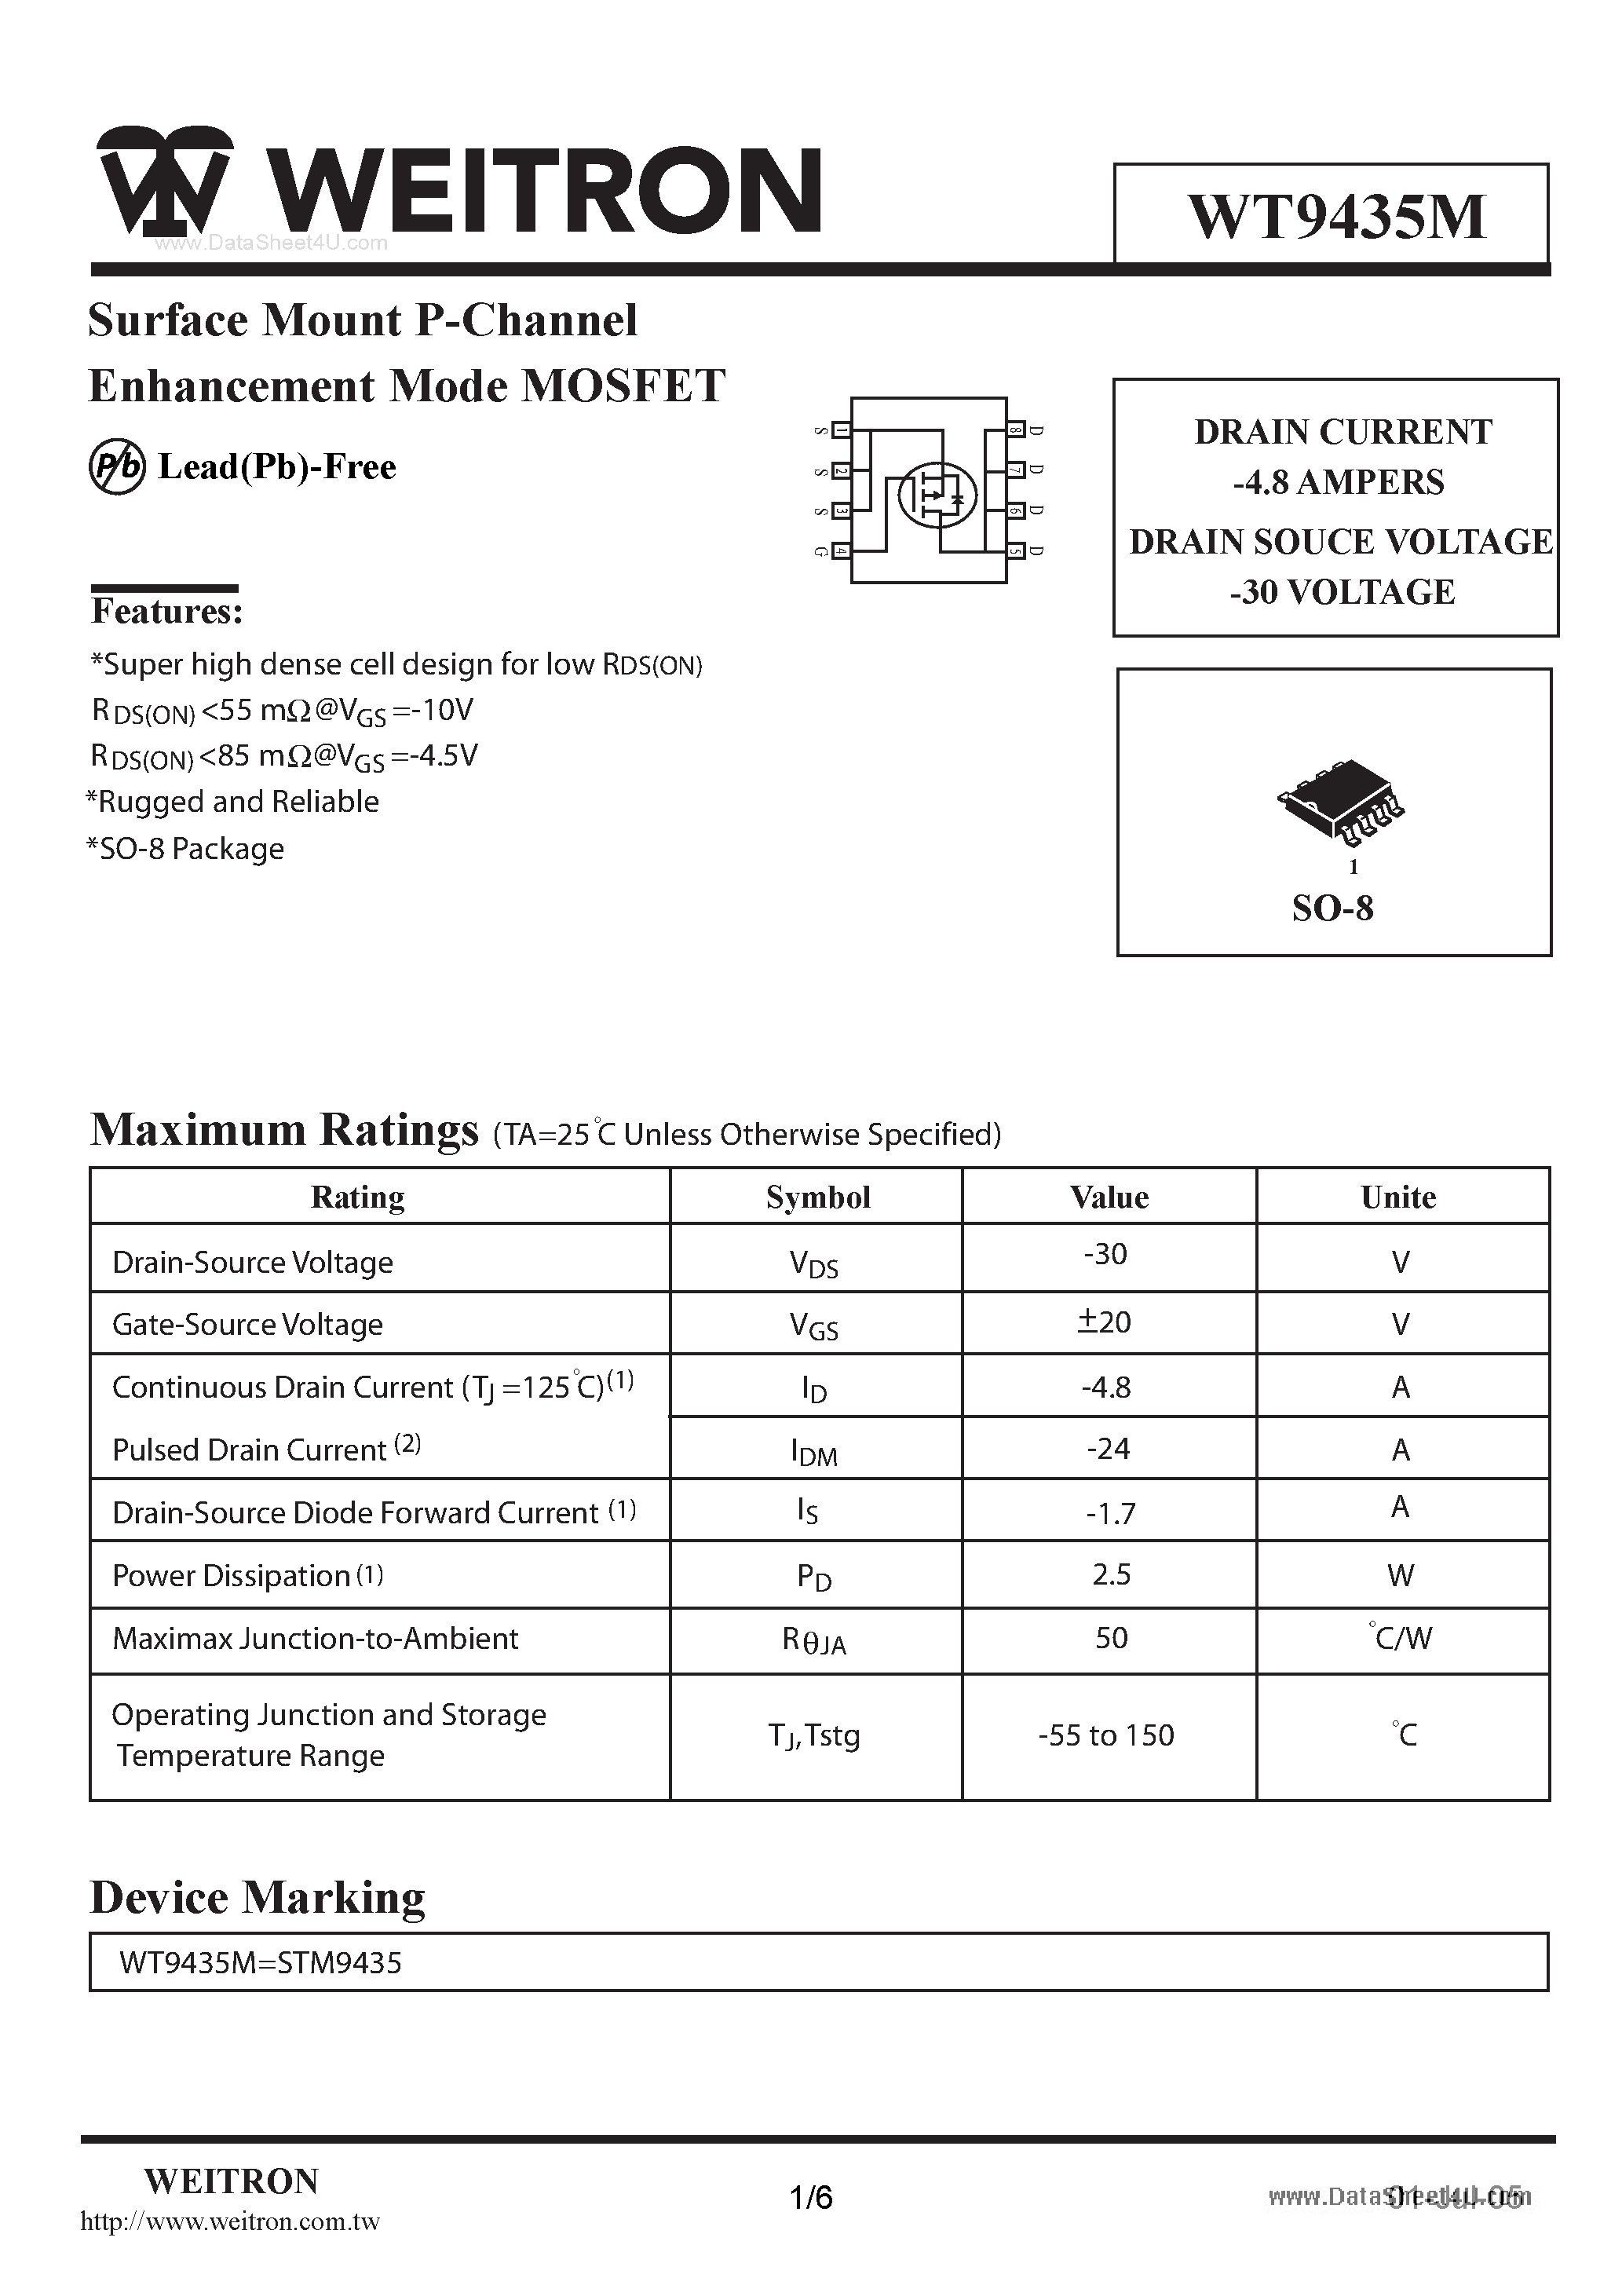 Datasheet WT9435M - Surface Mount P-Channel Enhancement Mode MOSFET page 1